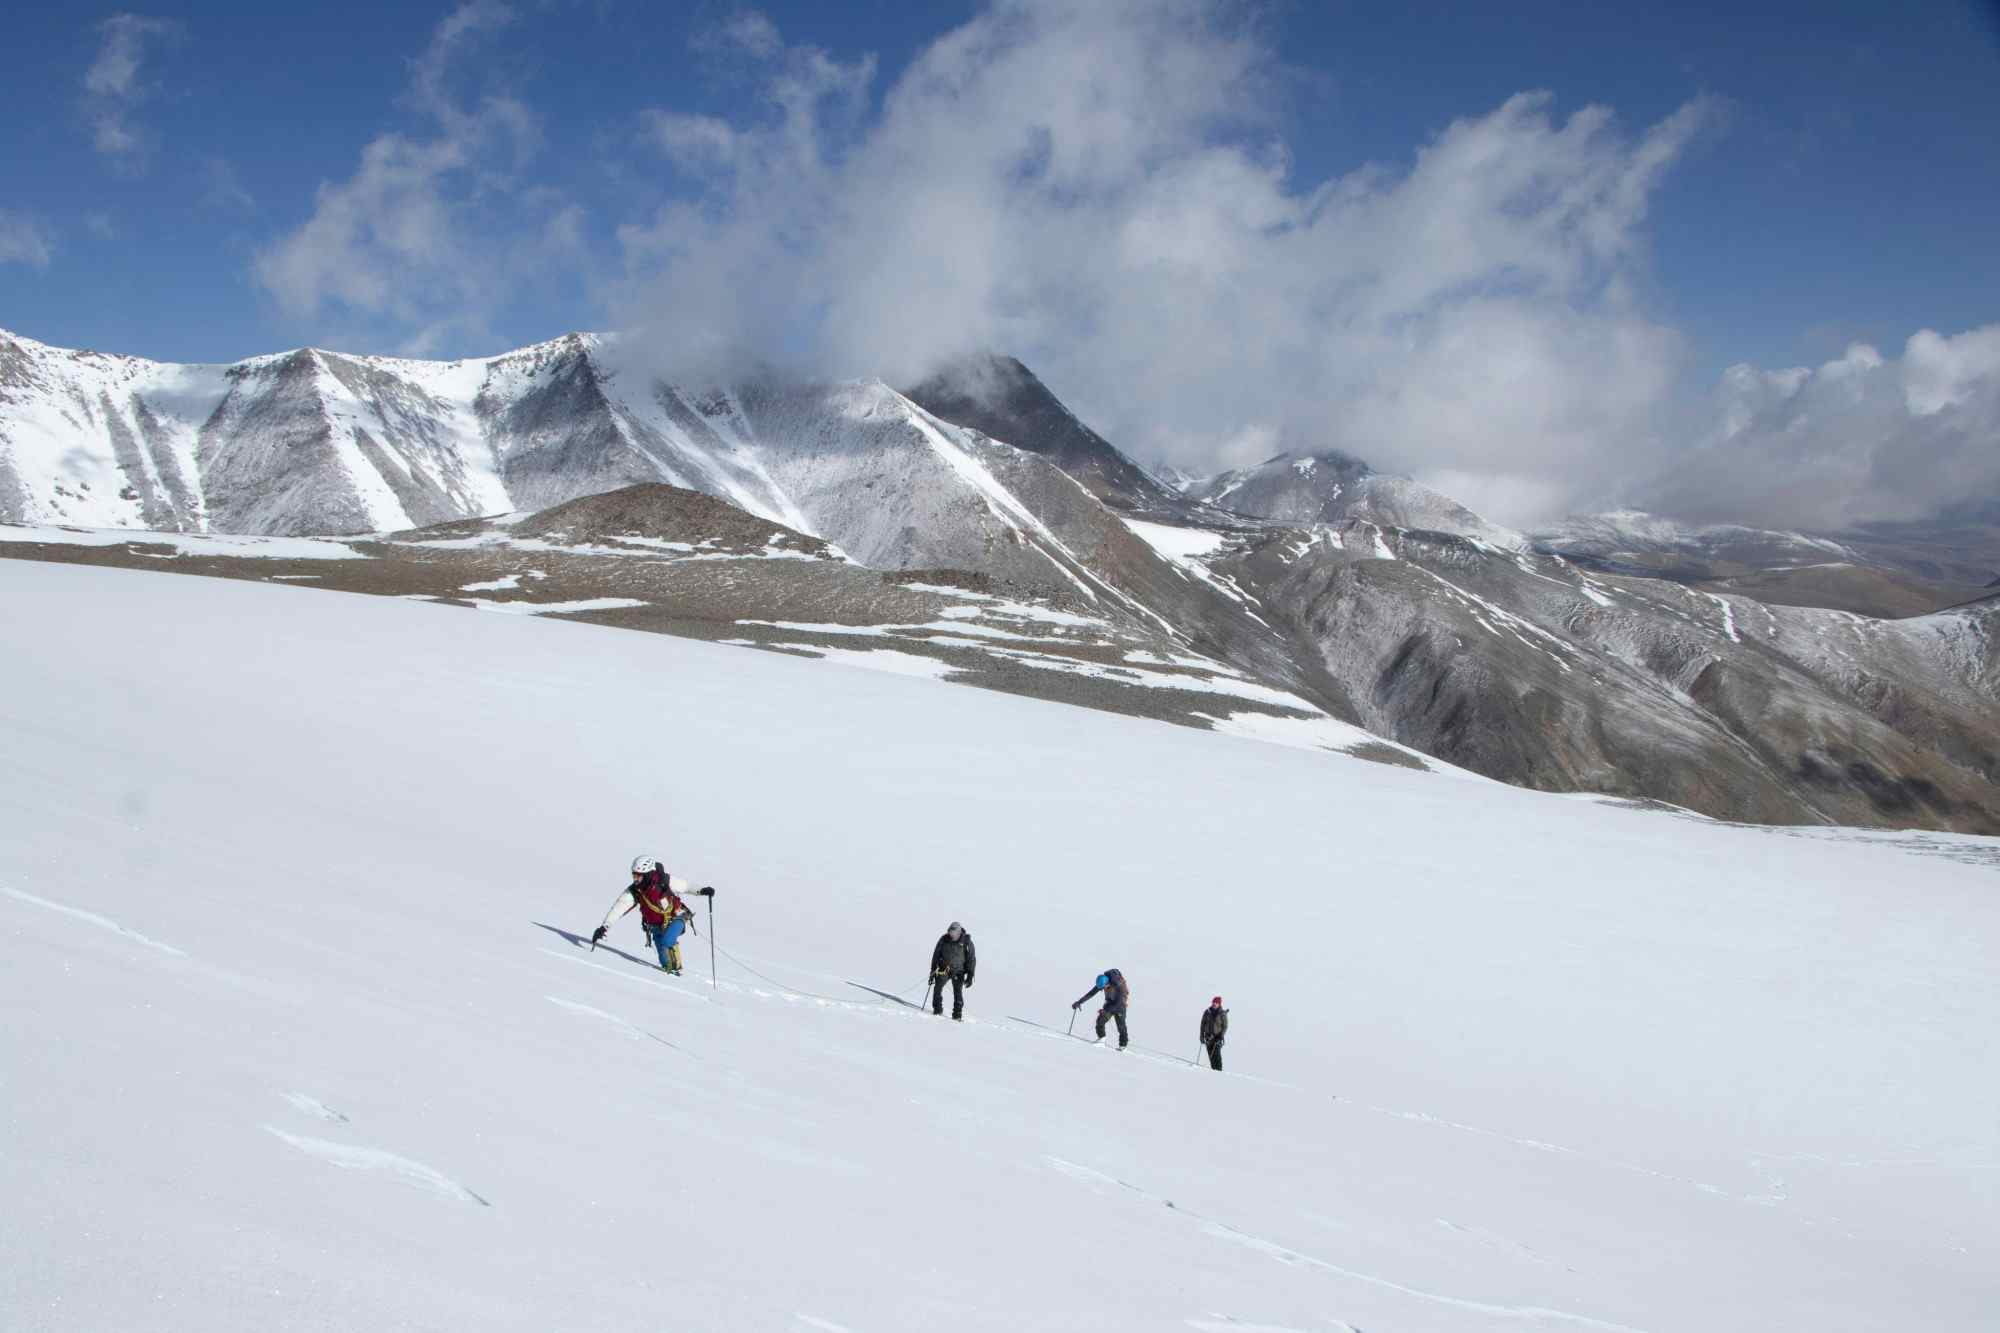 Four climbers ascending the snow fields of UT Kangri in Ladakh, India